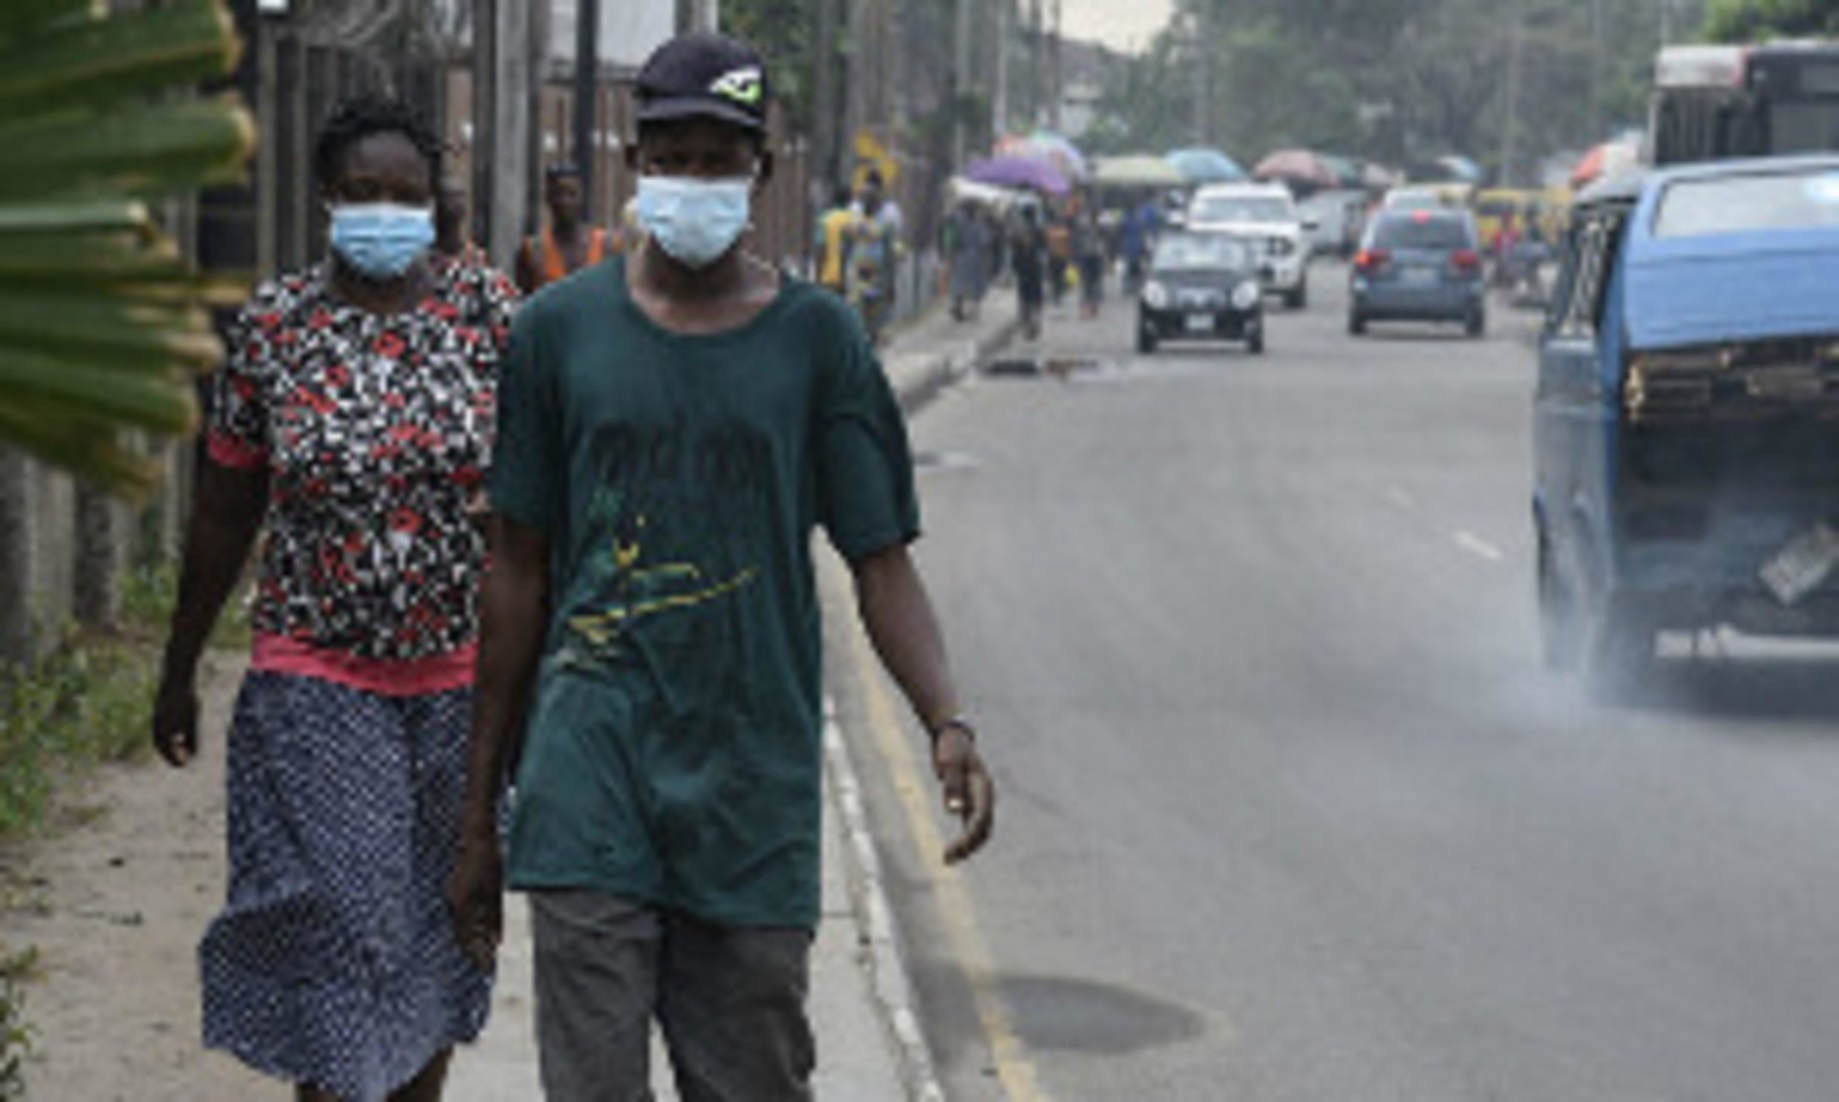 17 killed in Africa from coronavirus: WHO